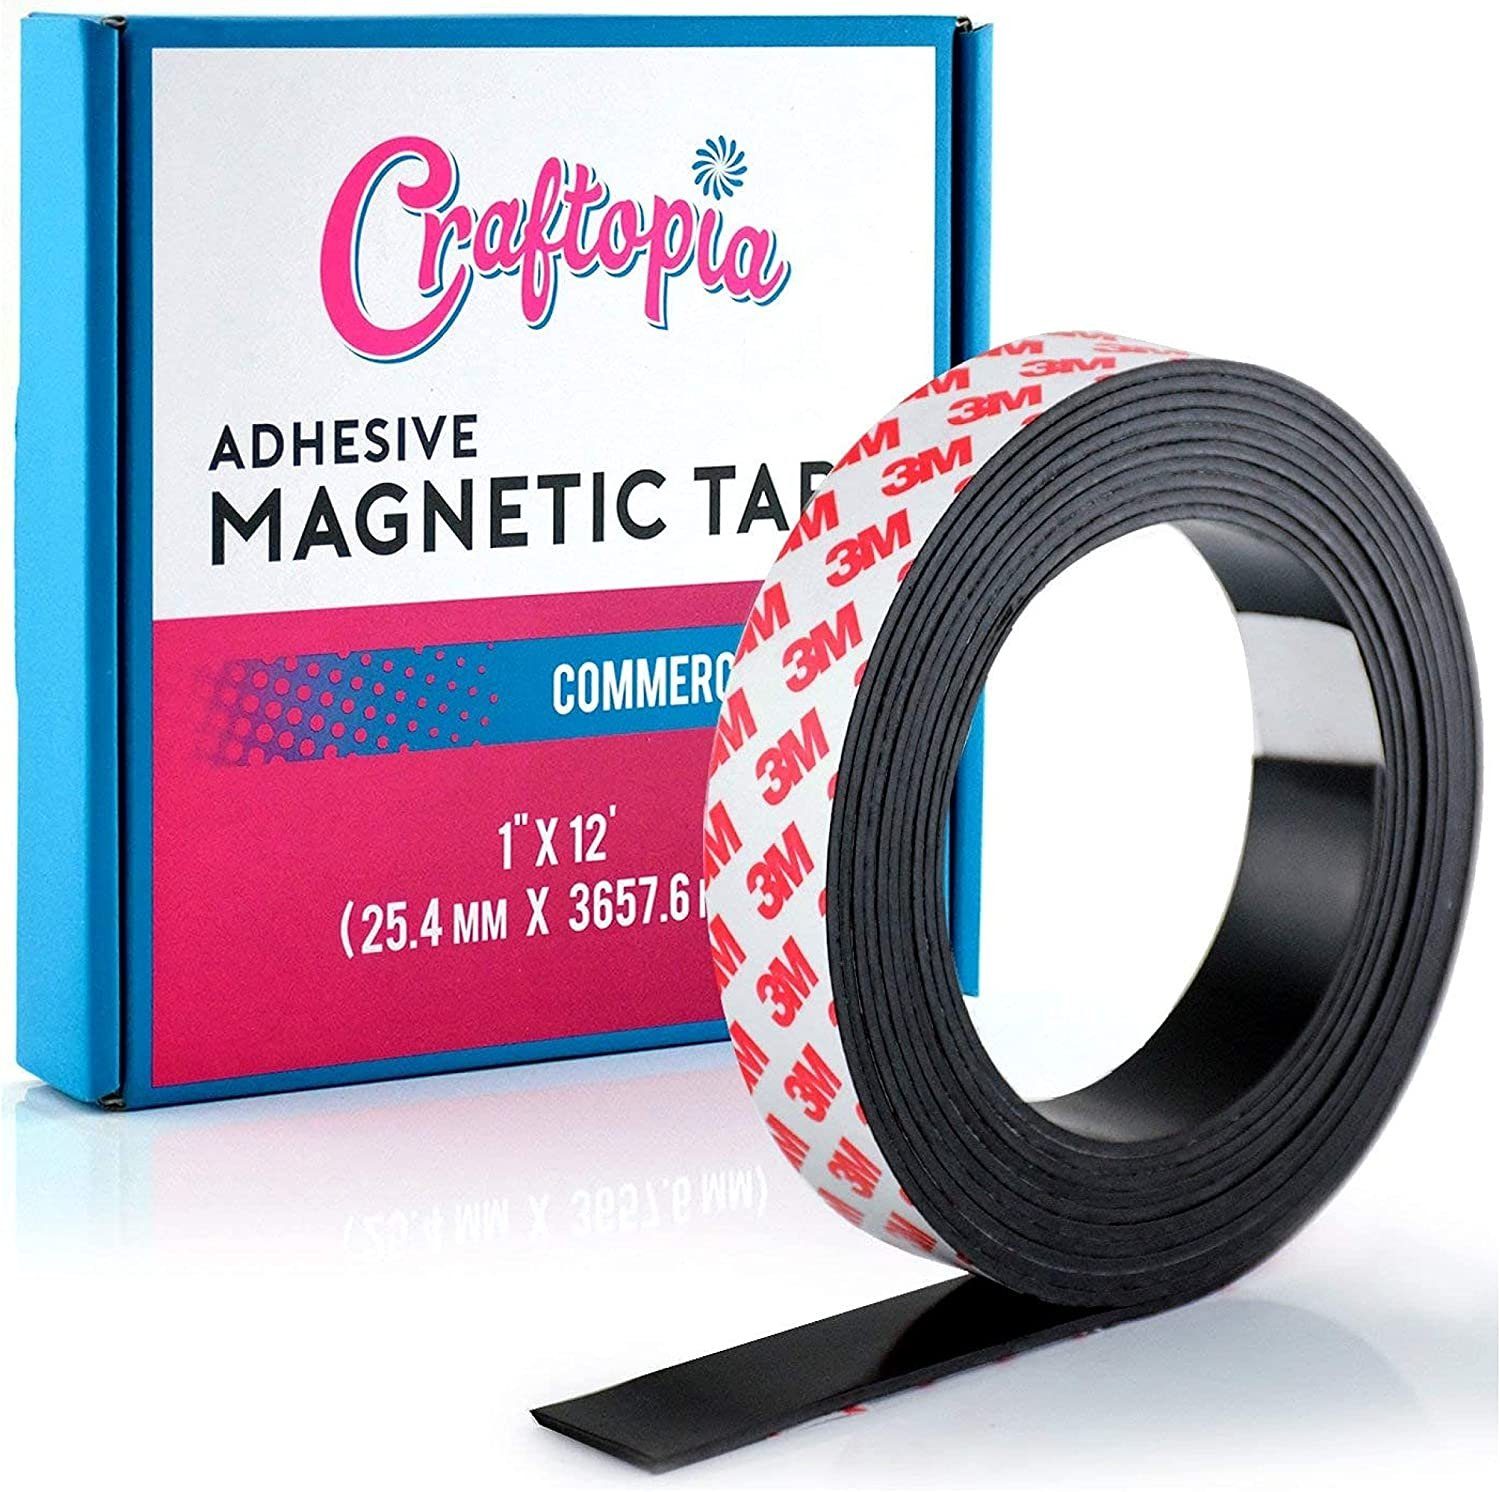 Magnetstreifen 3m Magnetband 300 cm stark - Klebestreifen Magnet